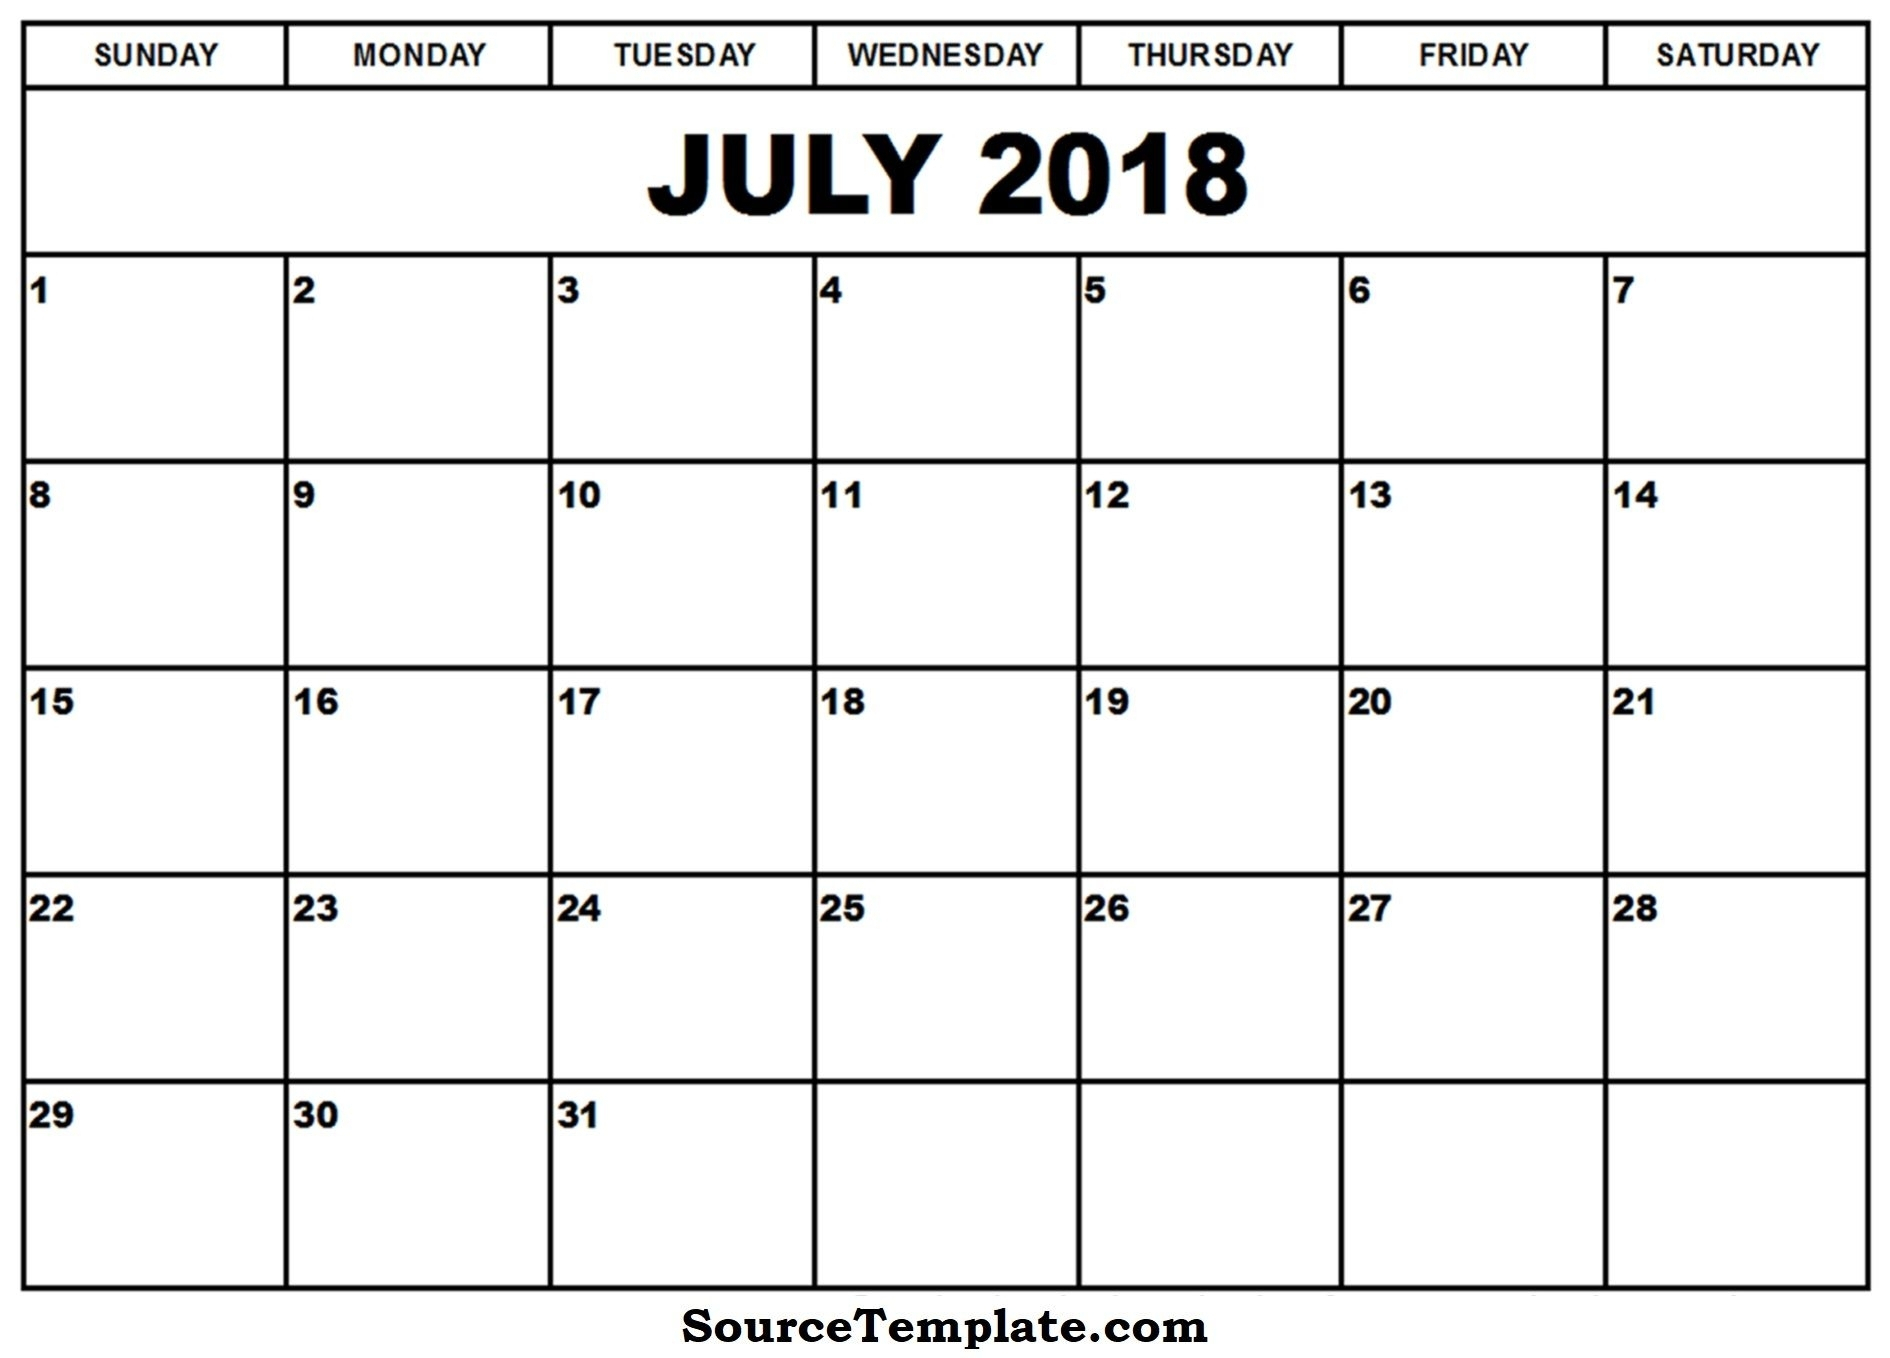 Calender Feb Big Block | Calendar Template 2021